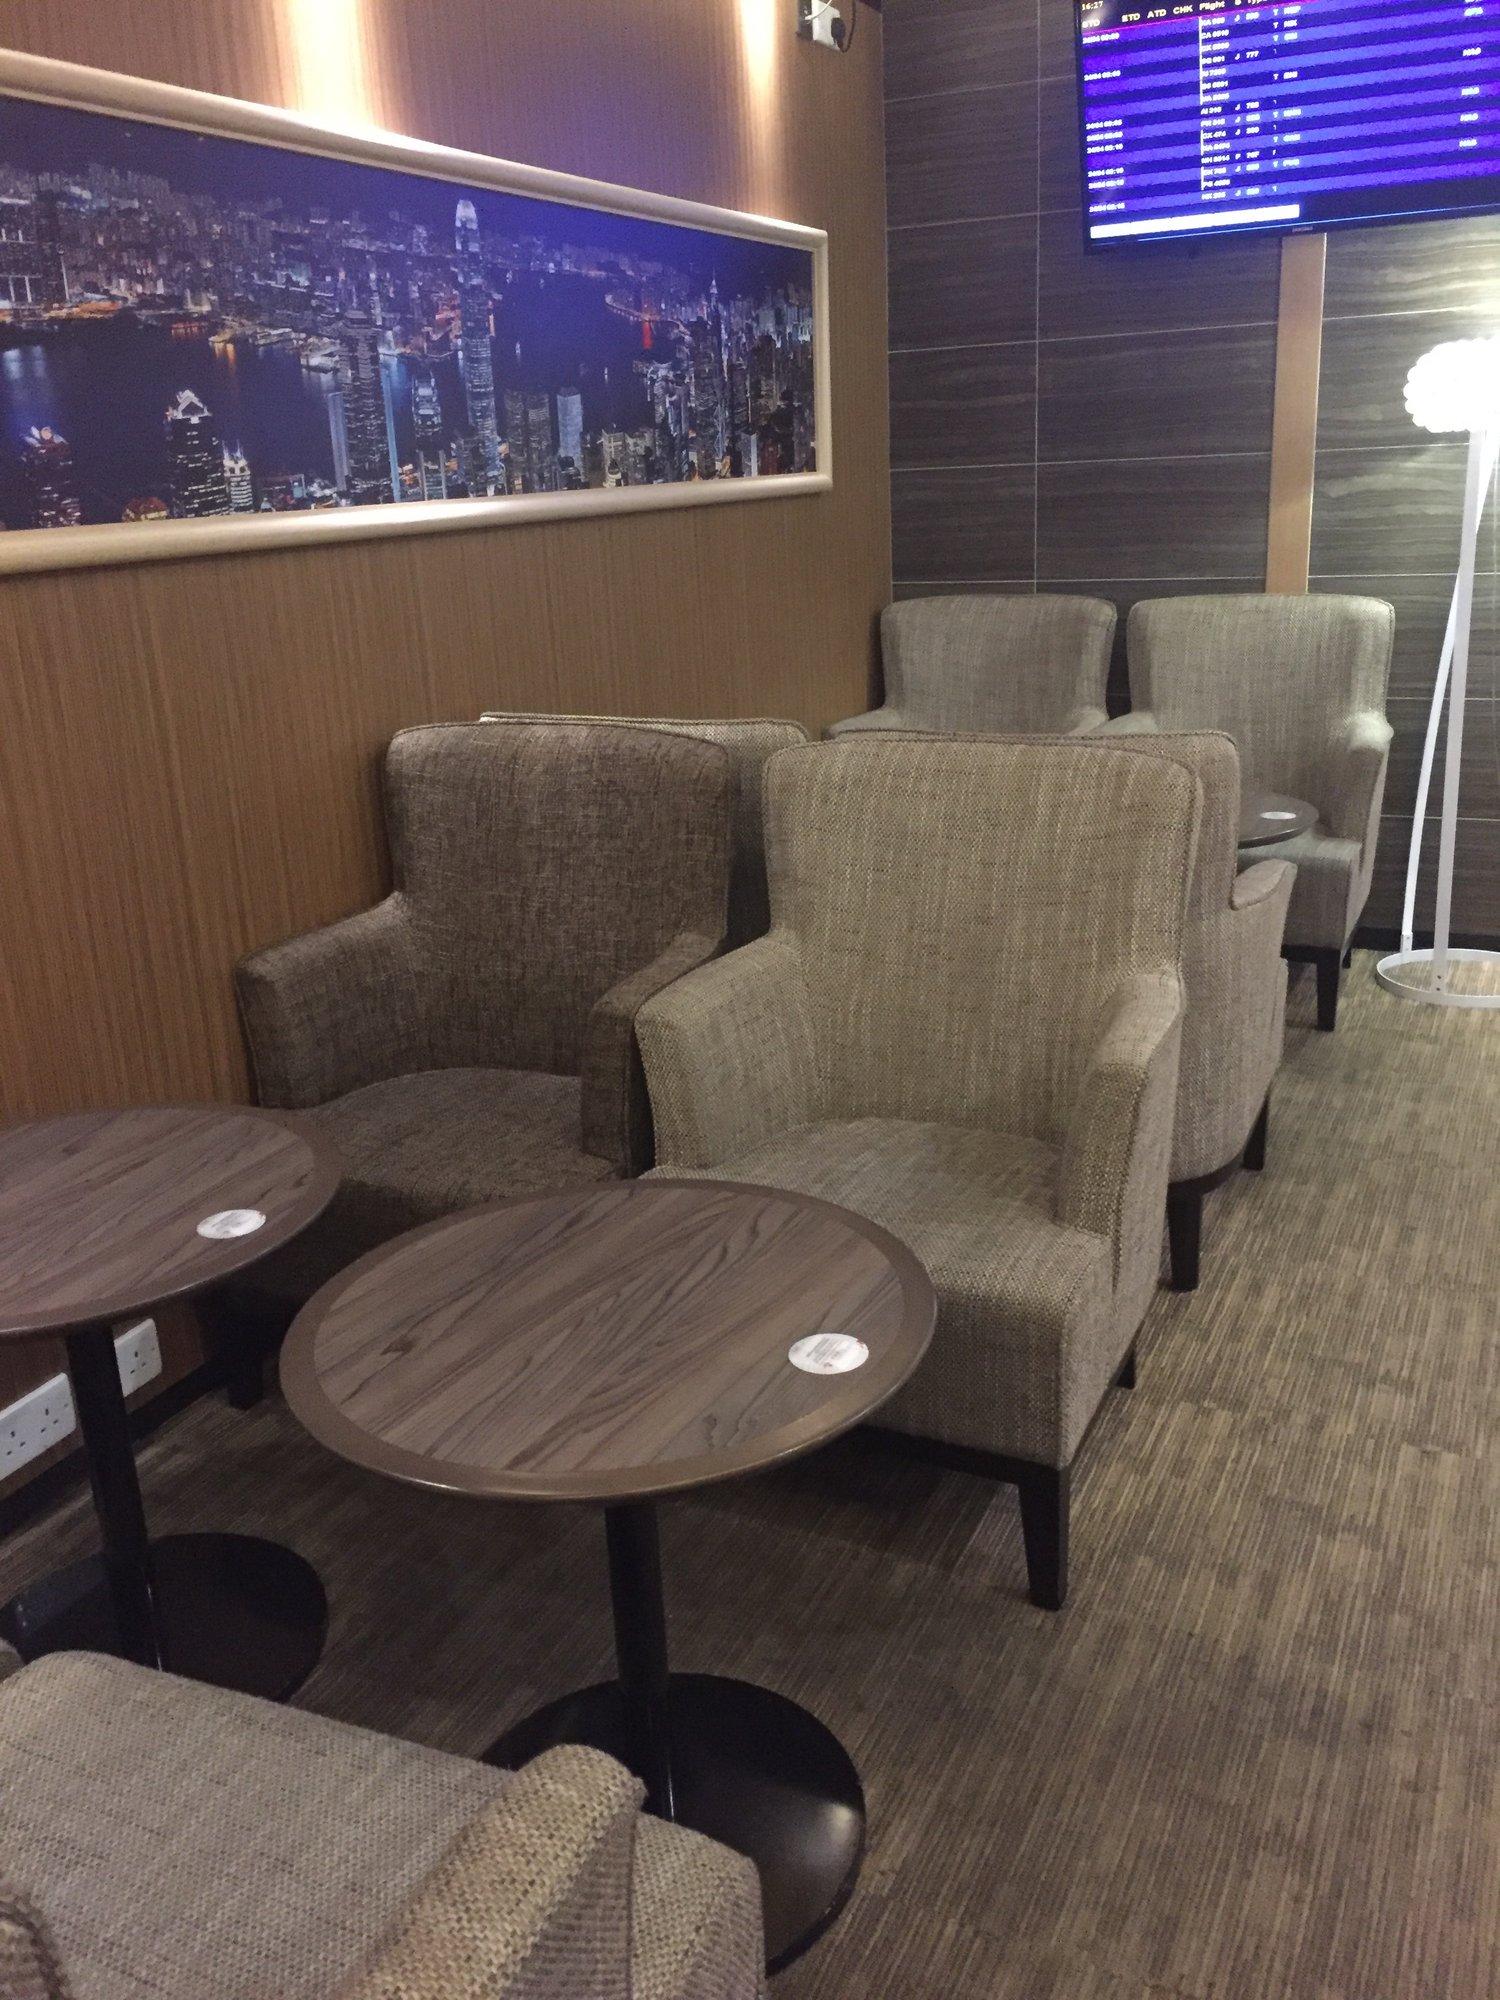 Hong Kong Airlines VIP Lounge (Club Bauhinia) image 35 of 40